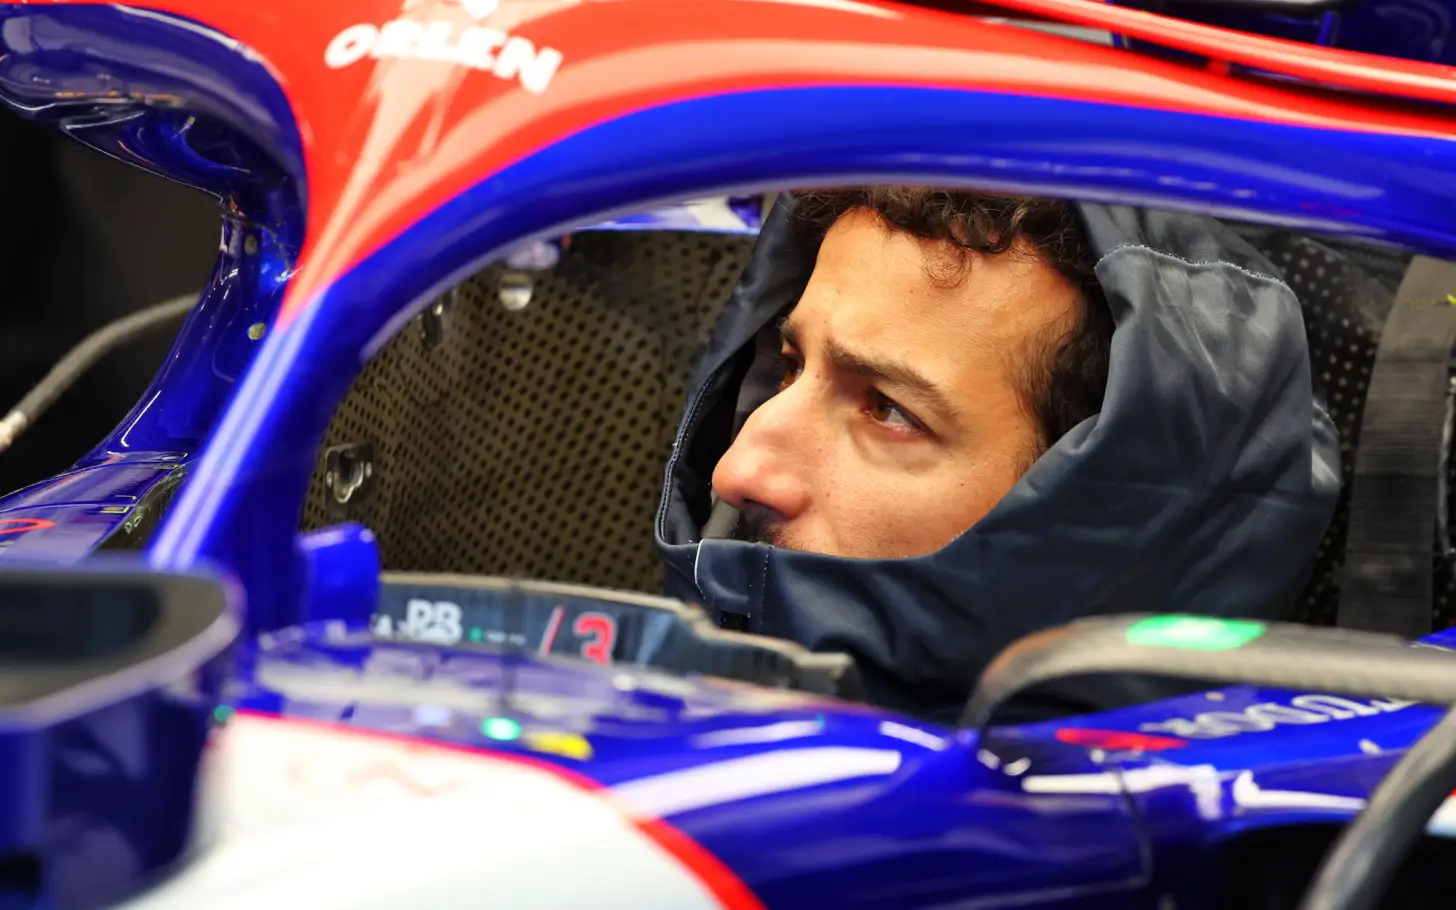 Tragic News: Ricciardo’s has sign multimillionaire contract with Ferrari worth $300 Million Dollar for duration of…..